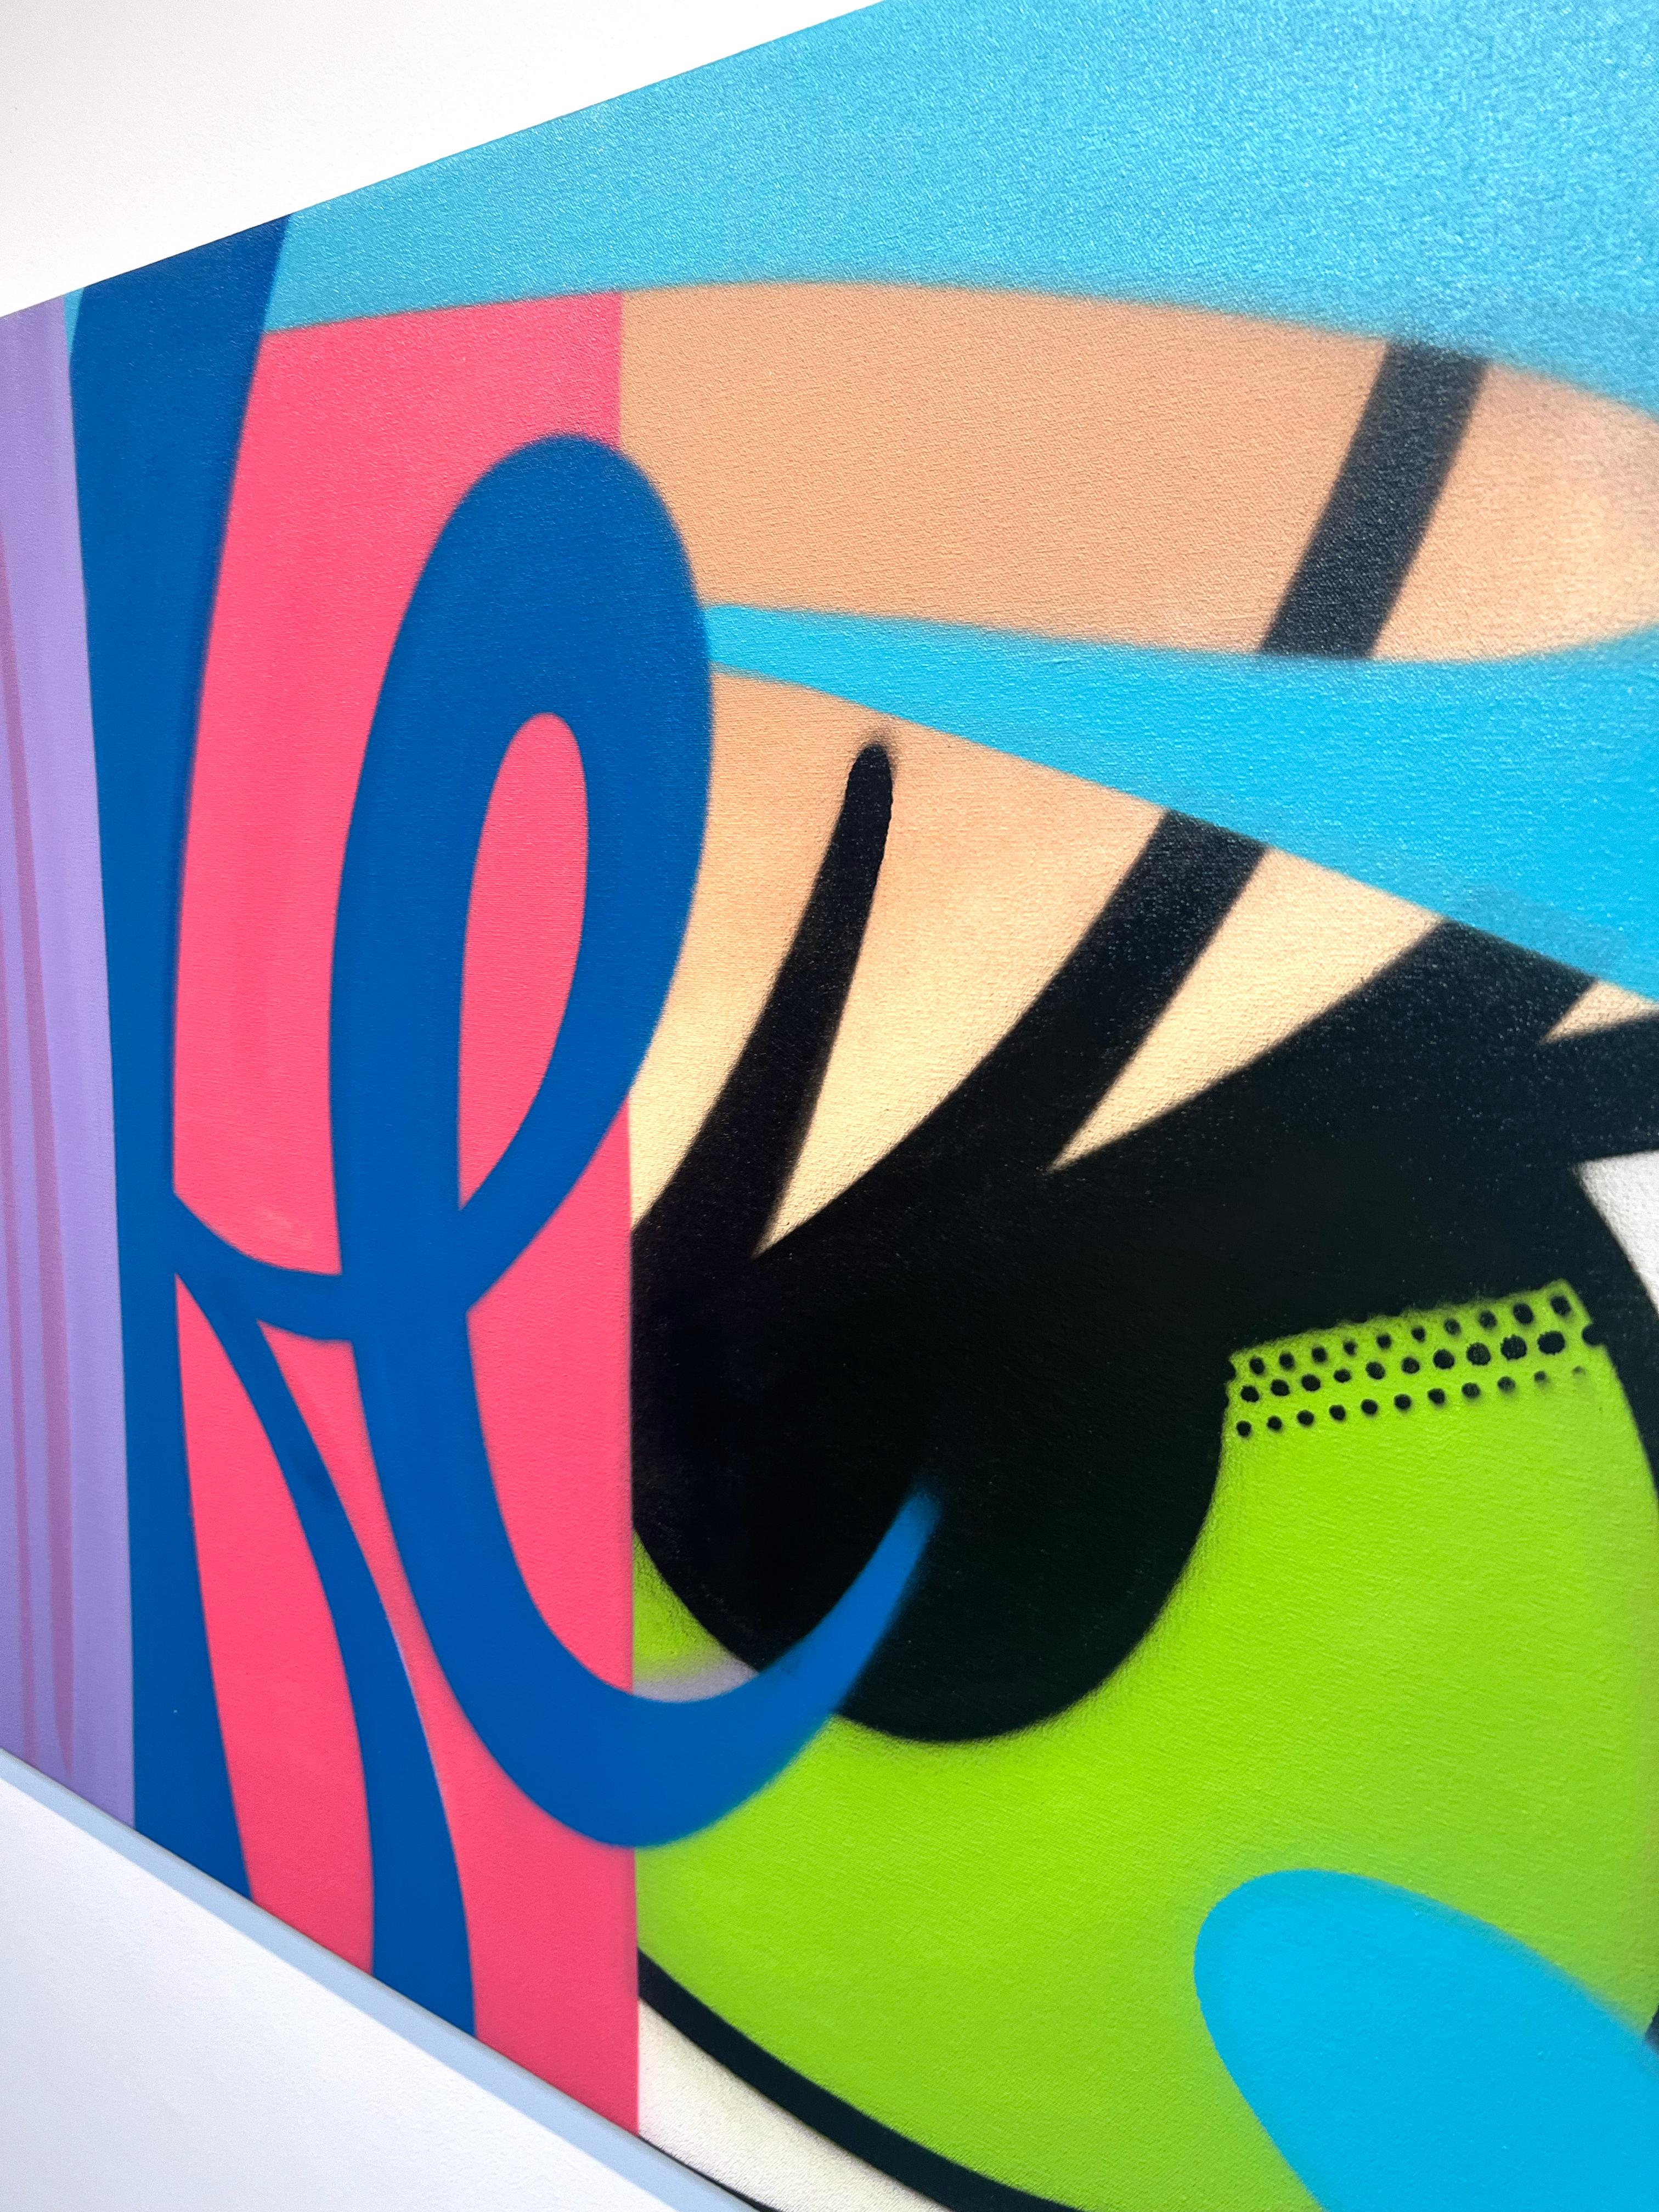 Spray Paint on Canvas/Graffiti/Street Art_Melancholy Drama_John 